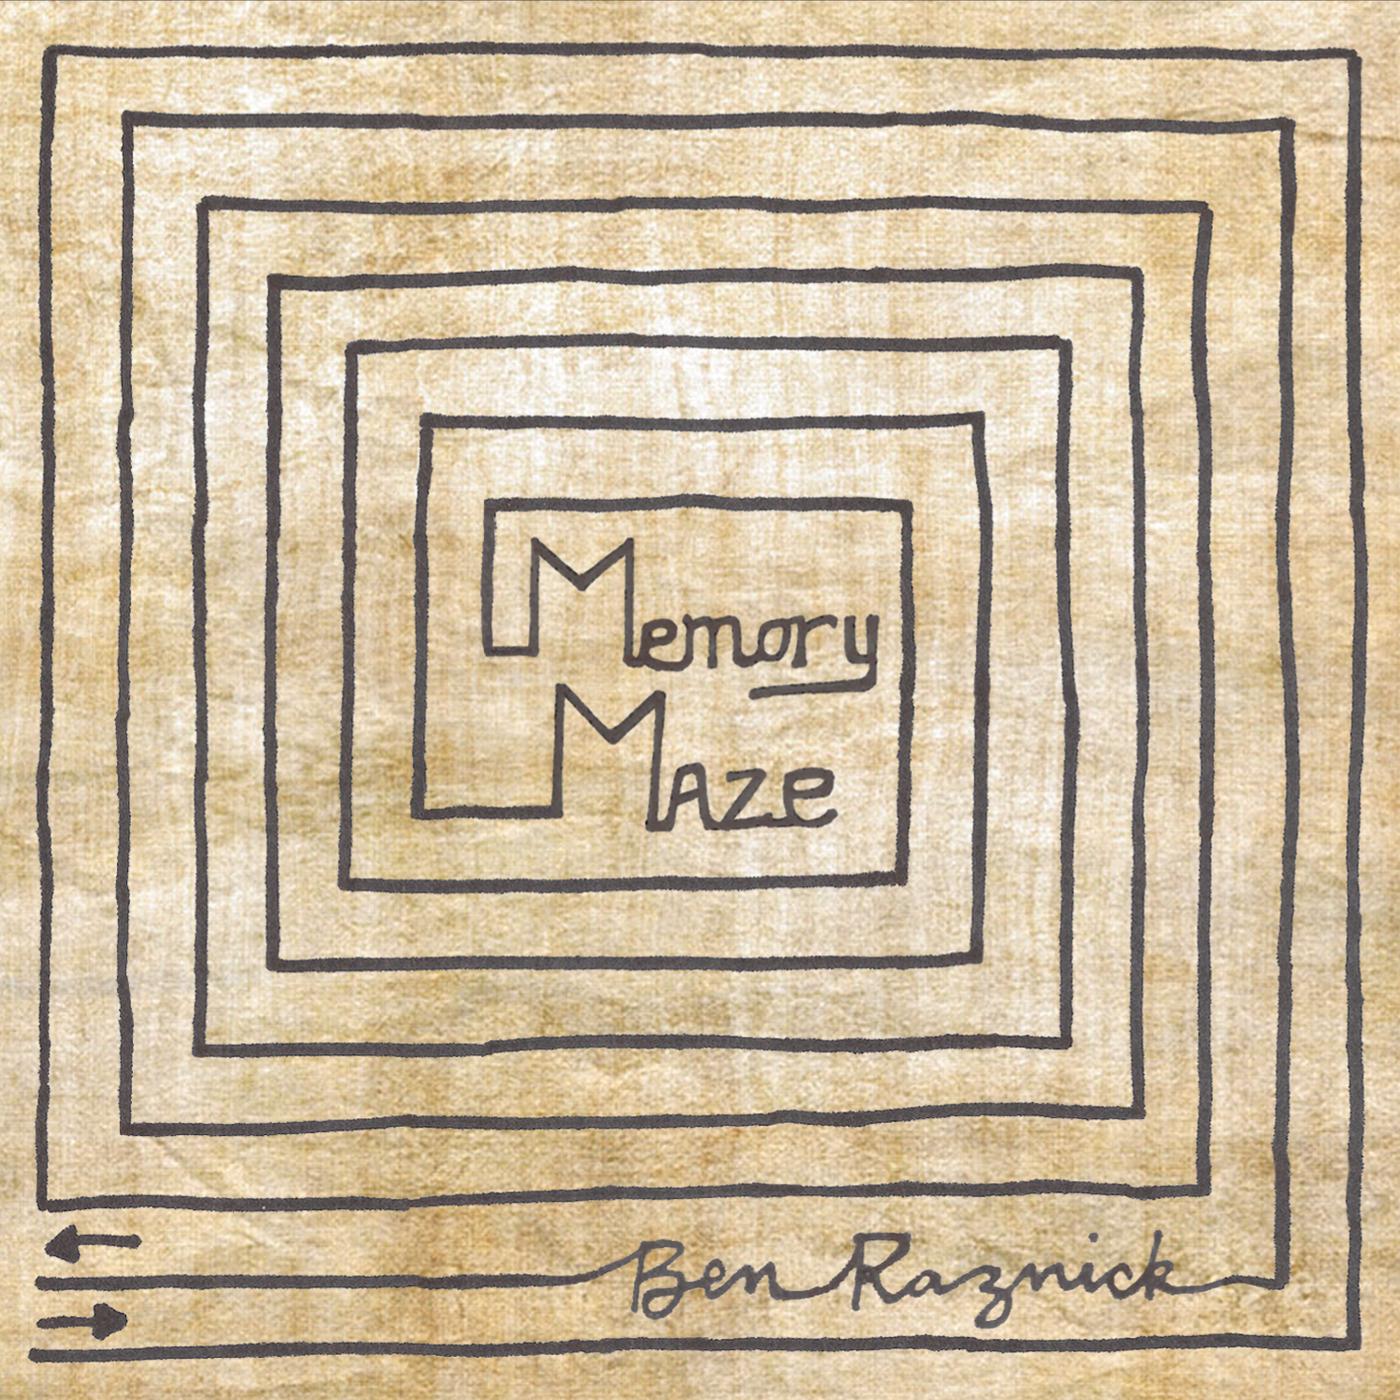 Memory Maze